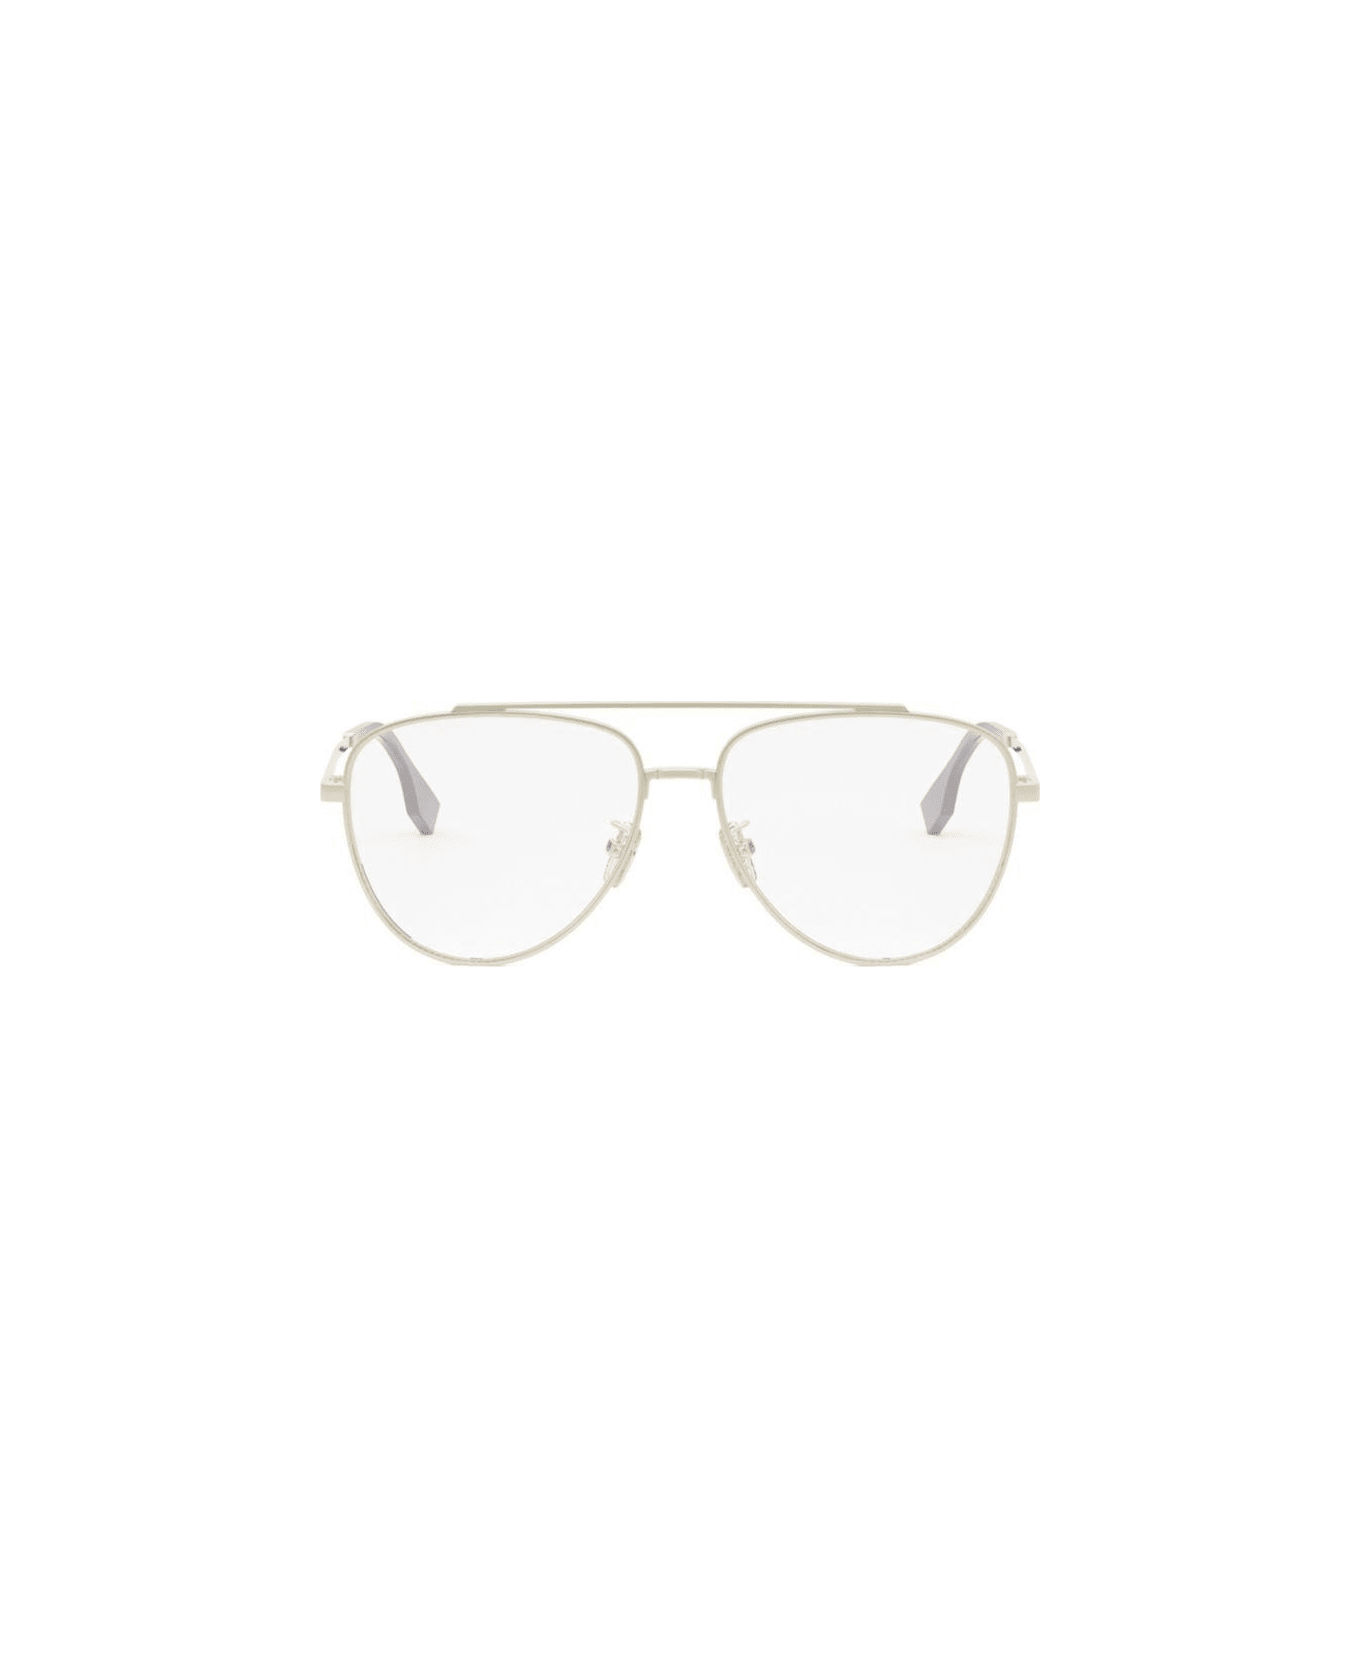 Fendi Eyewear Aviator Frame Glasses - 032 アイウェア